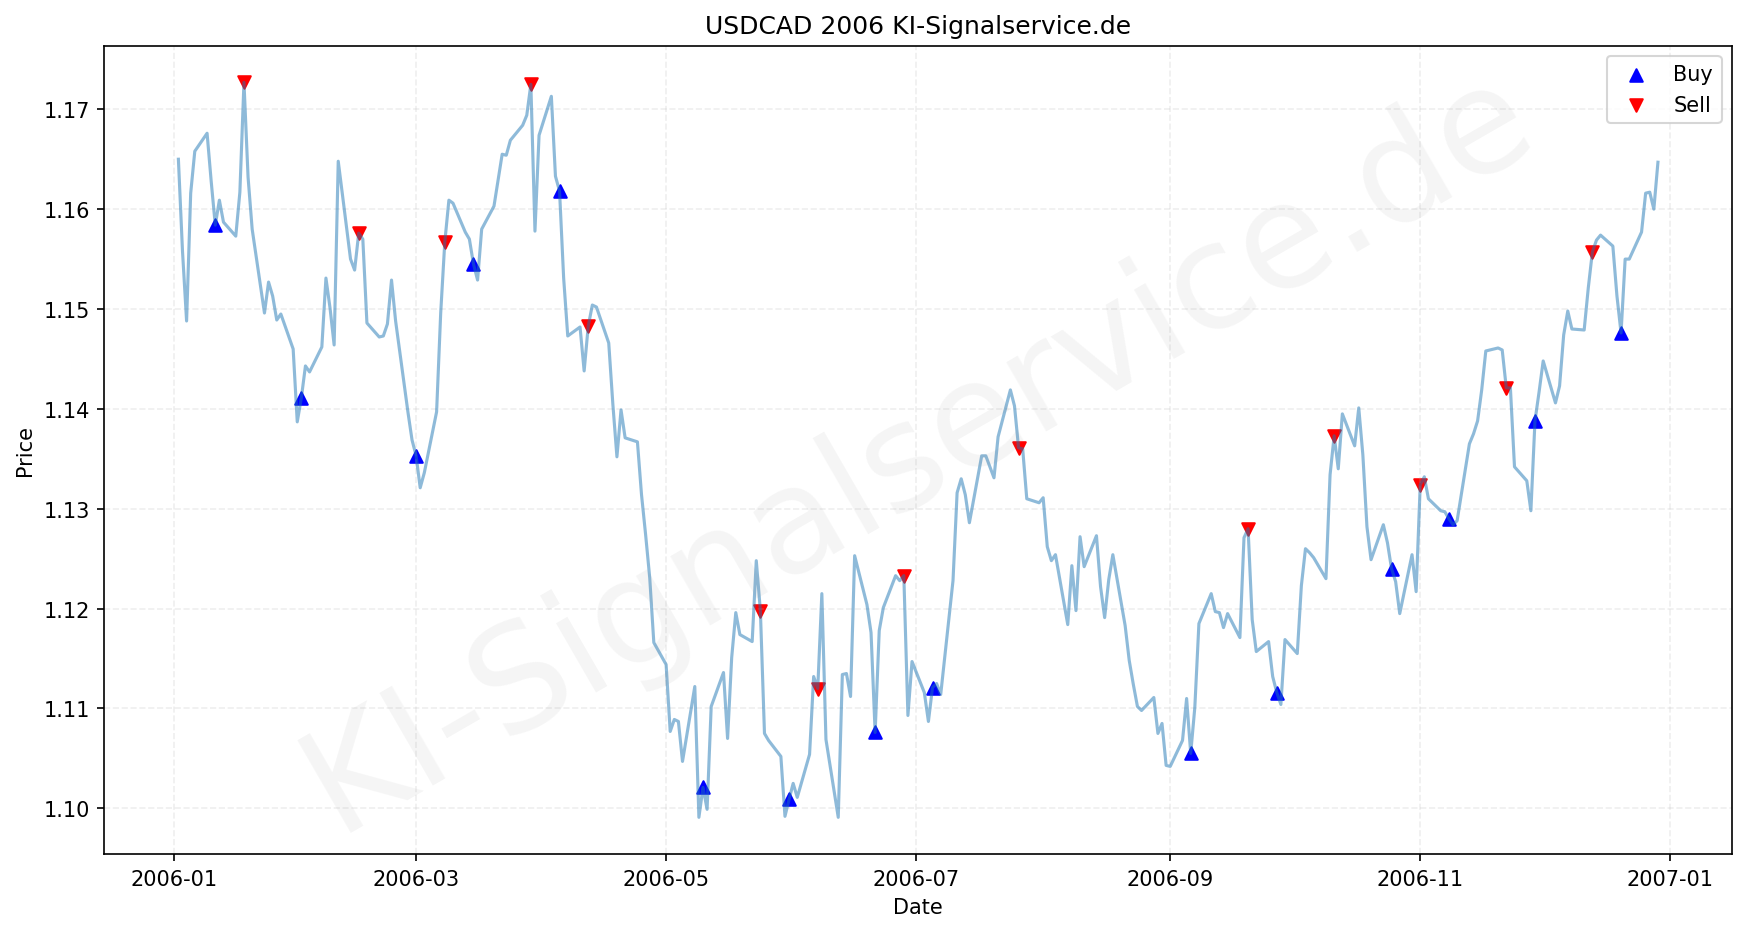 USDCAD Chart - KI Tradingsignale 2006